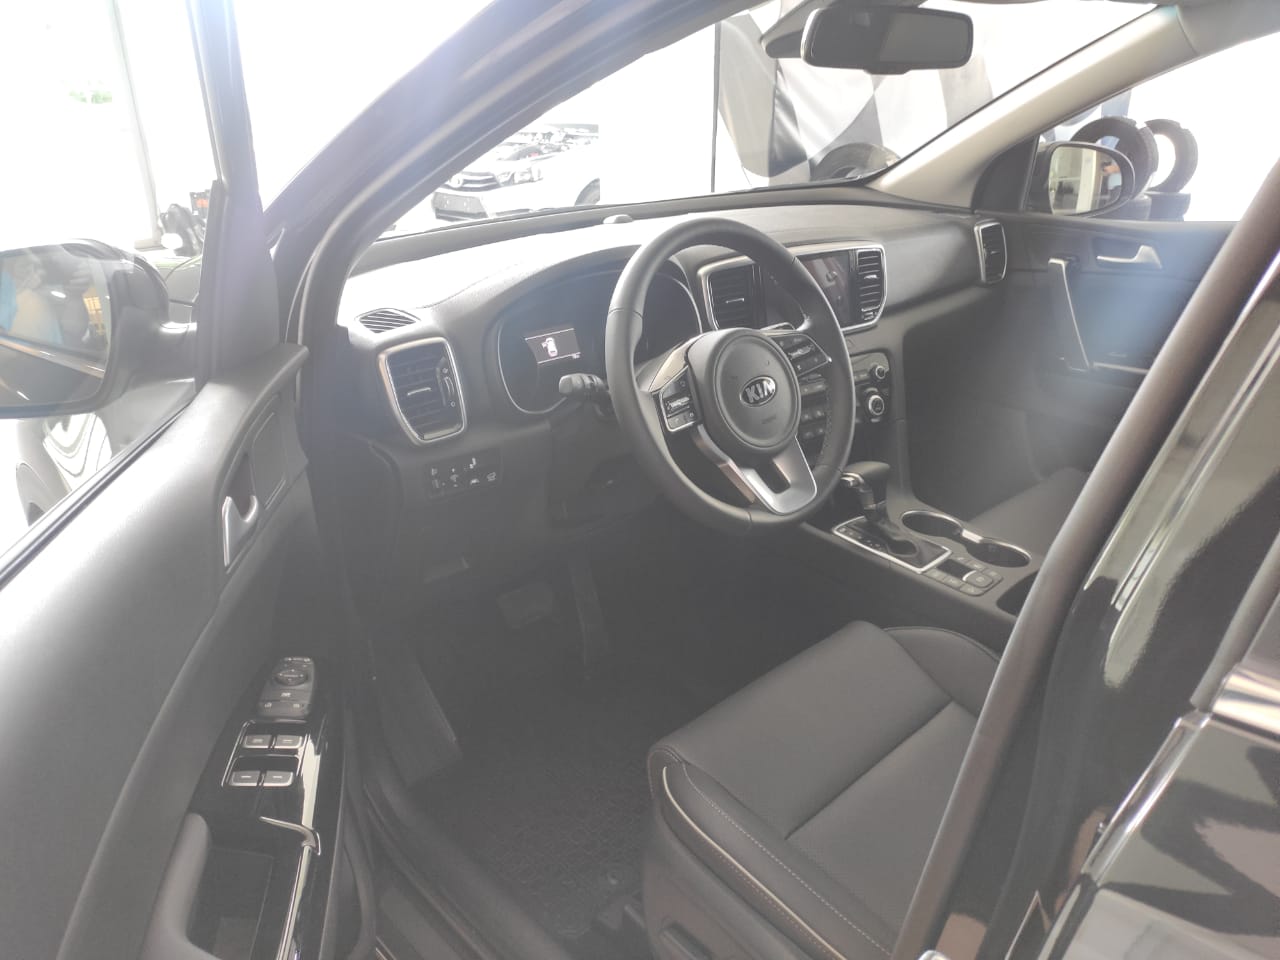 Kia Sportage 2.4 GDI., 184 л.c., бензин., Автомат 6AT., Полный 4WD., Premium Black Edition., 2021